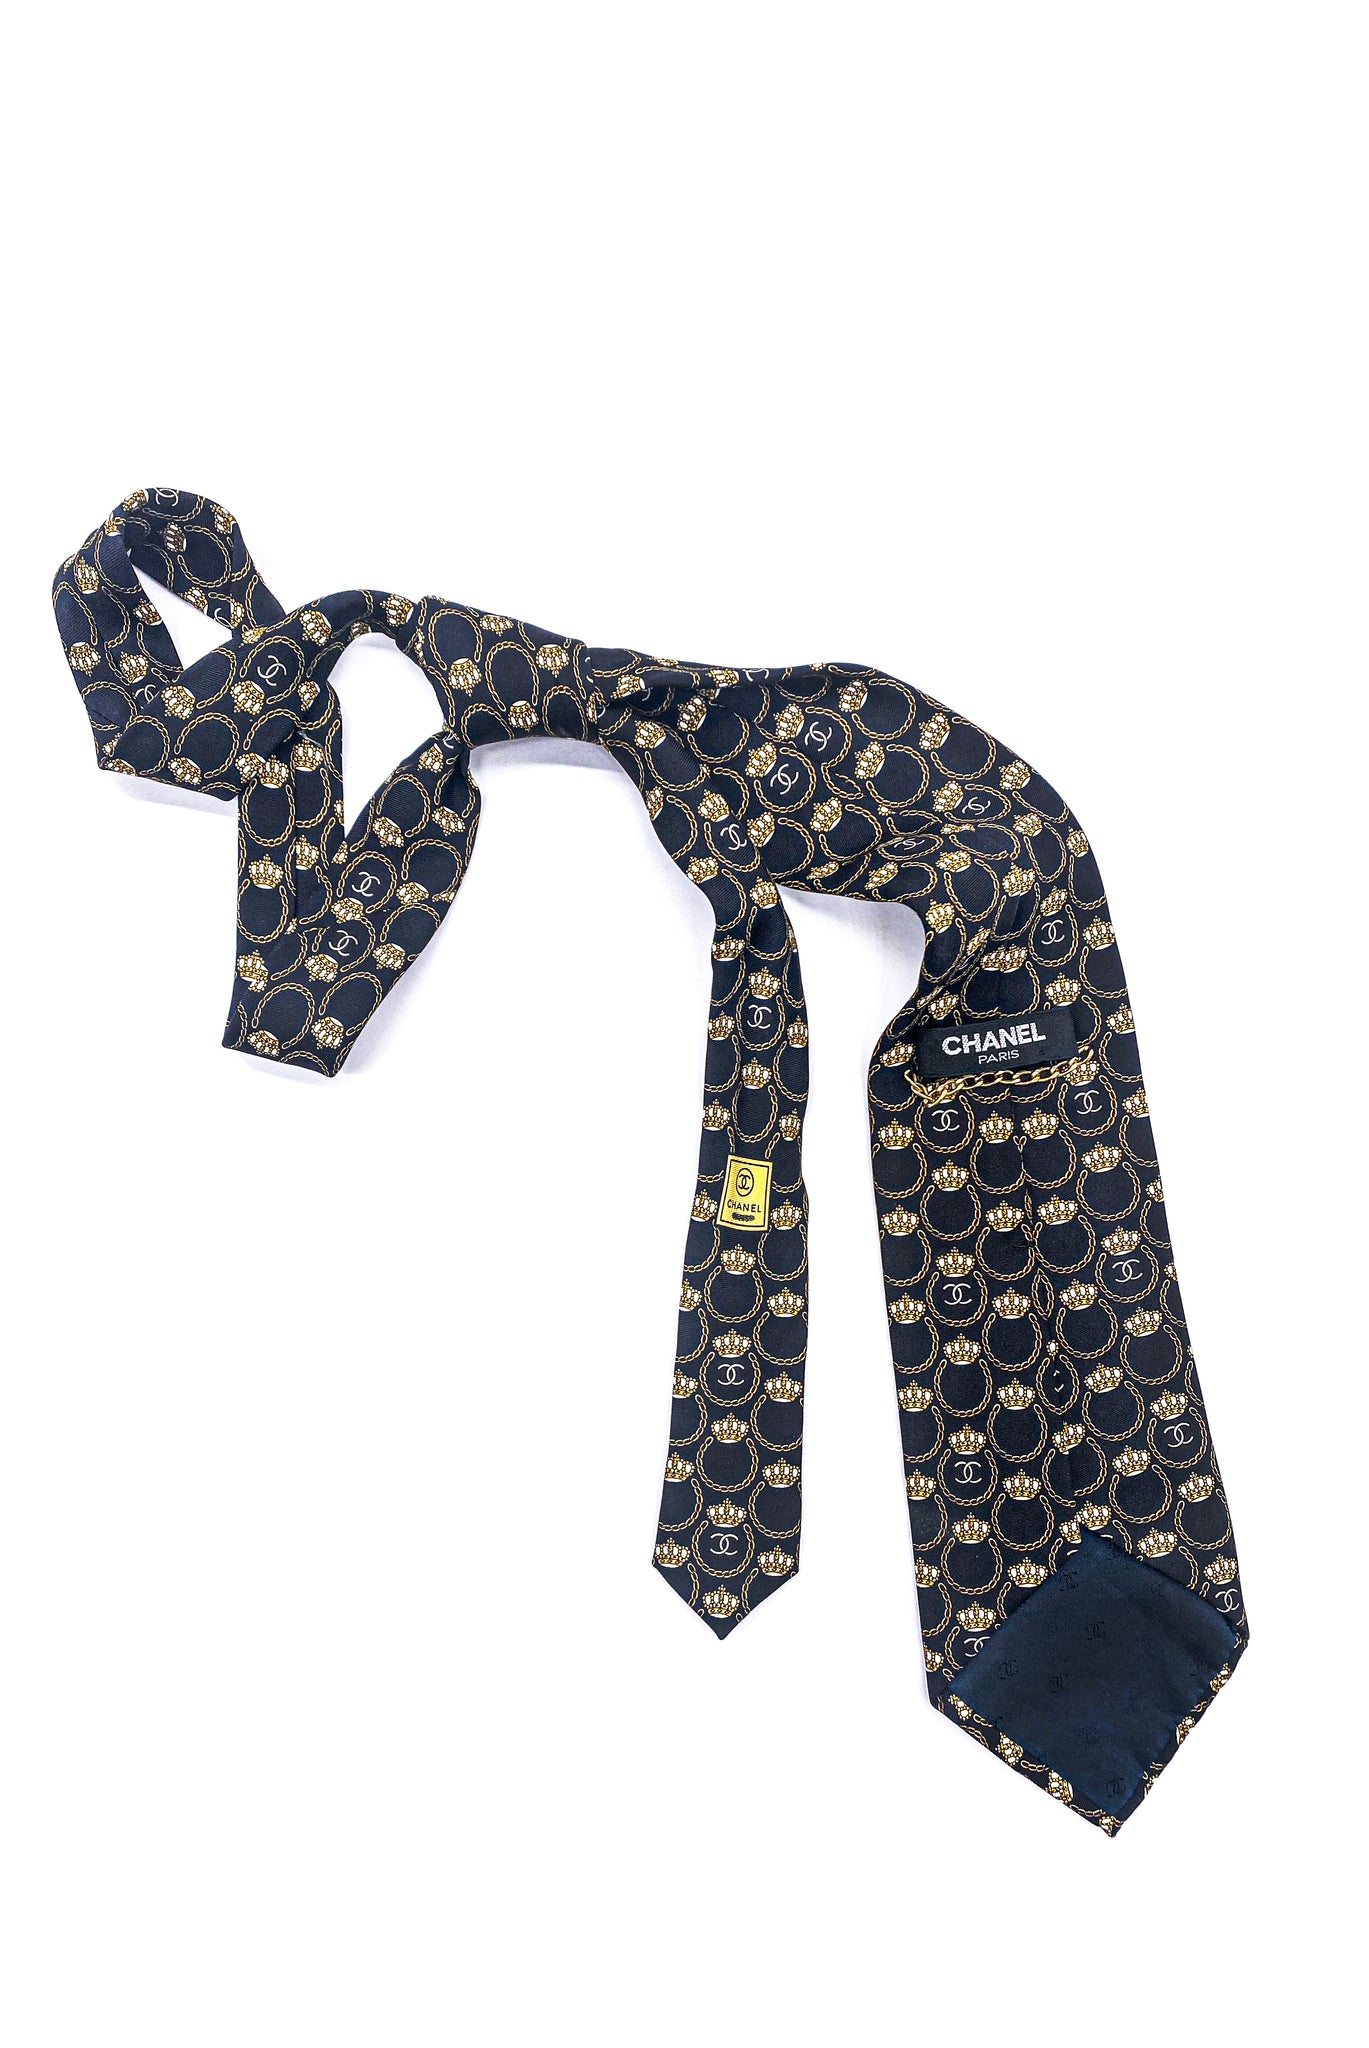 Chanel Tie with Gold Crown Print – PauméLosAngeles